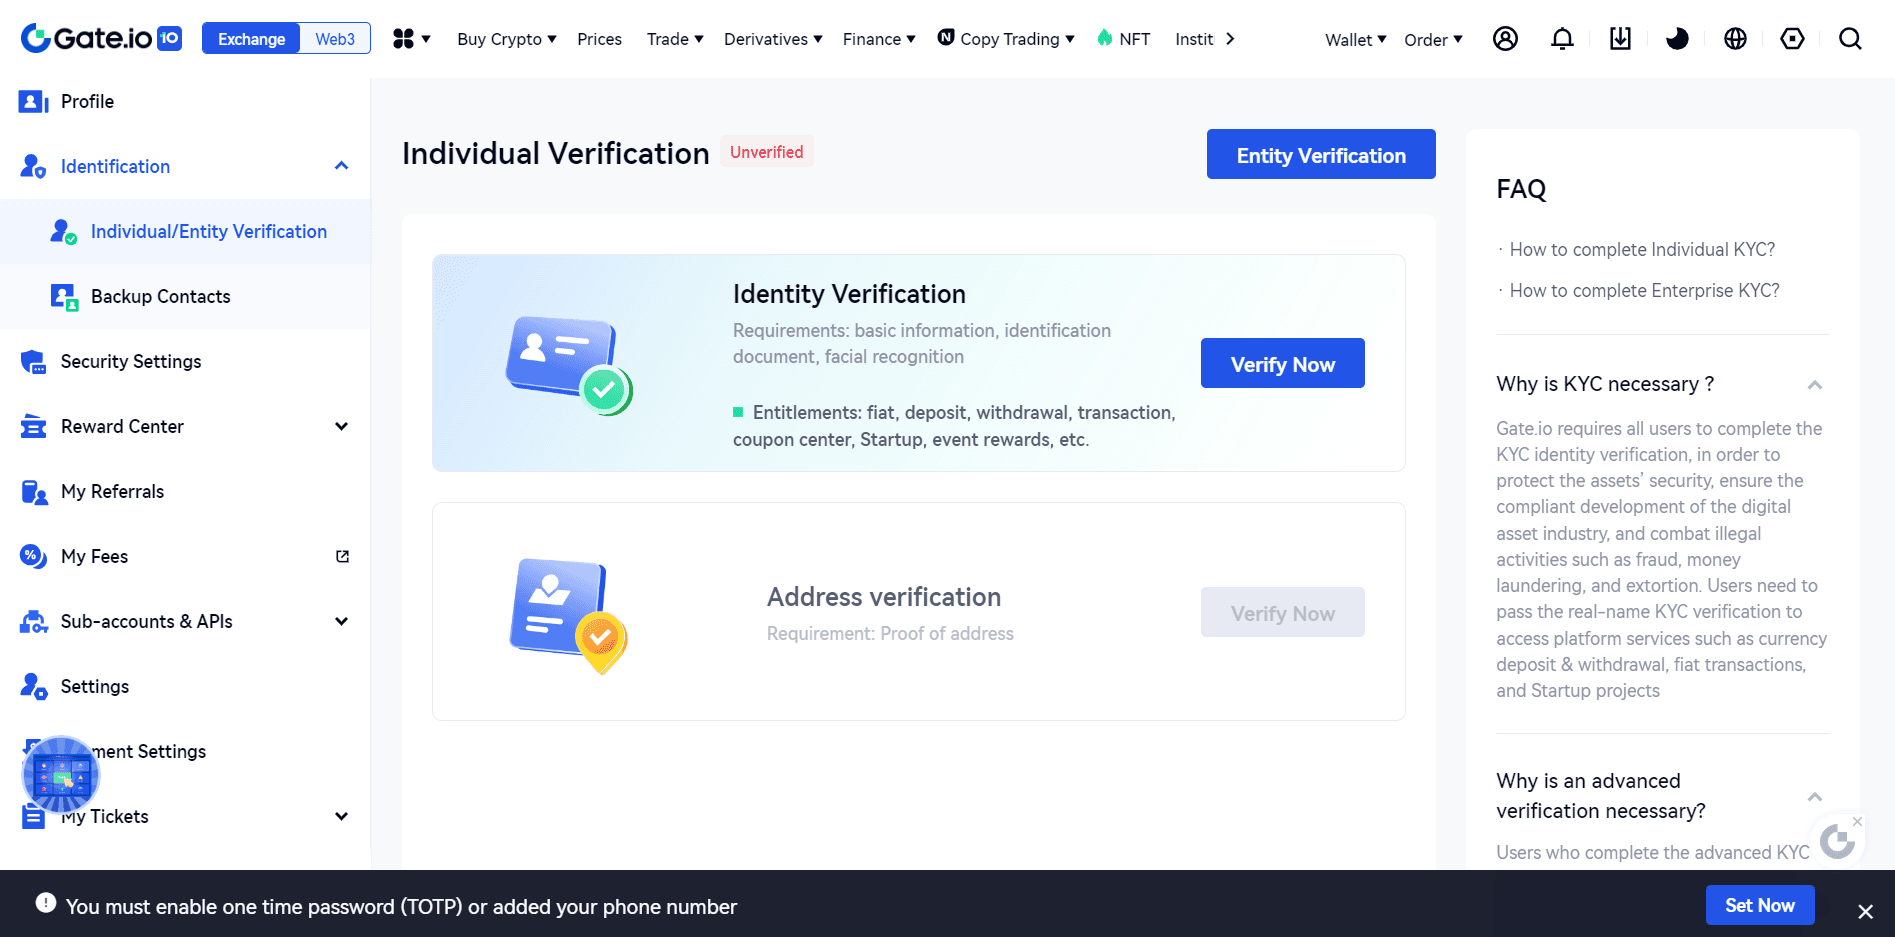 Image of Gate.io identity verification page